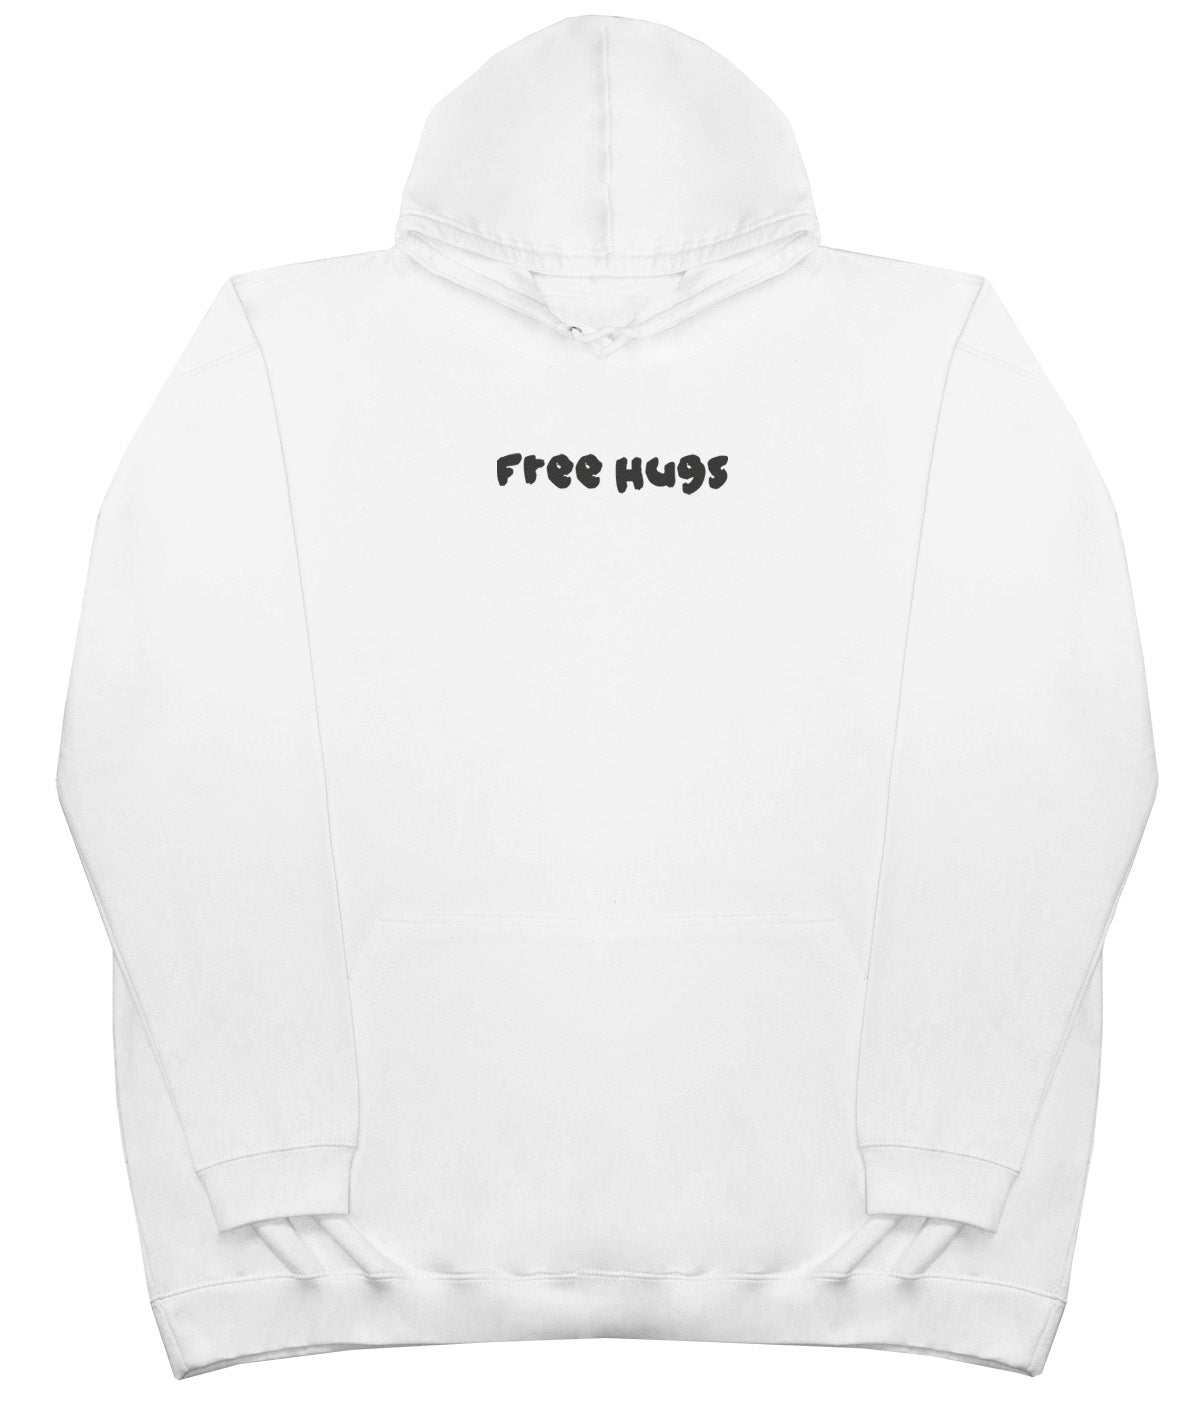 Free Hugs - Huge Oversized Comfy Original Hoody